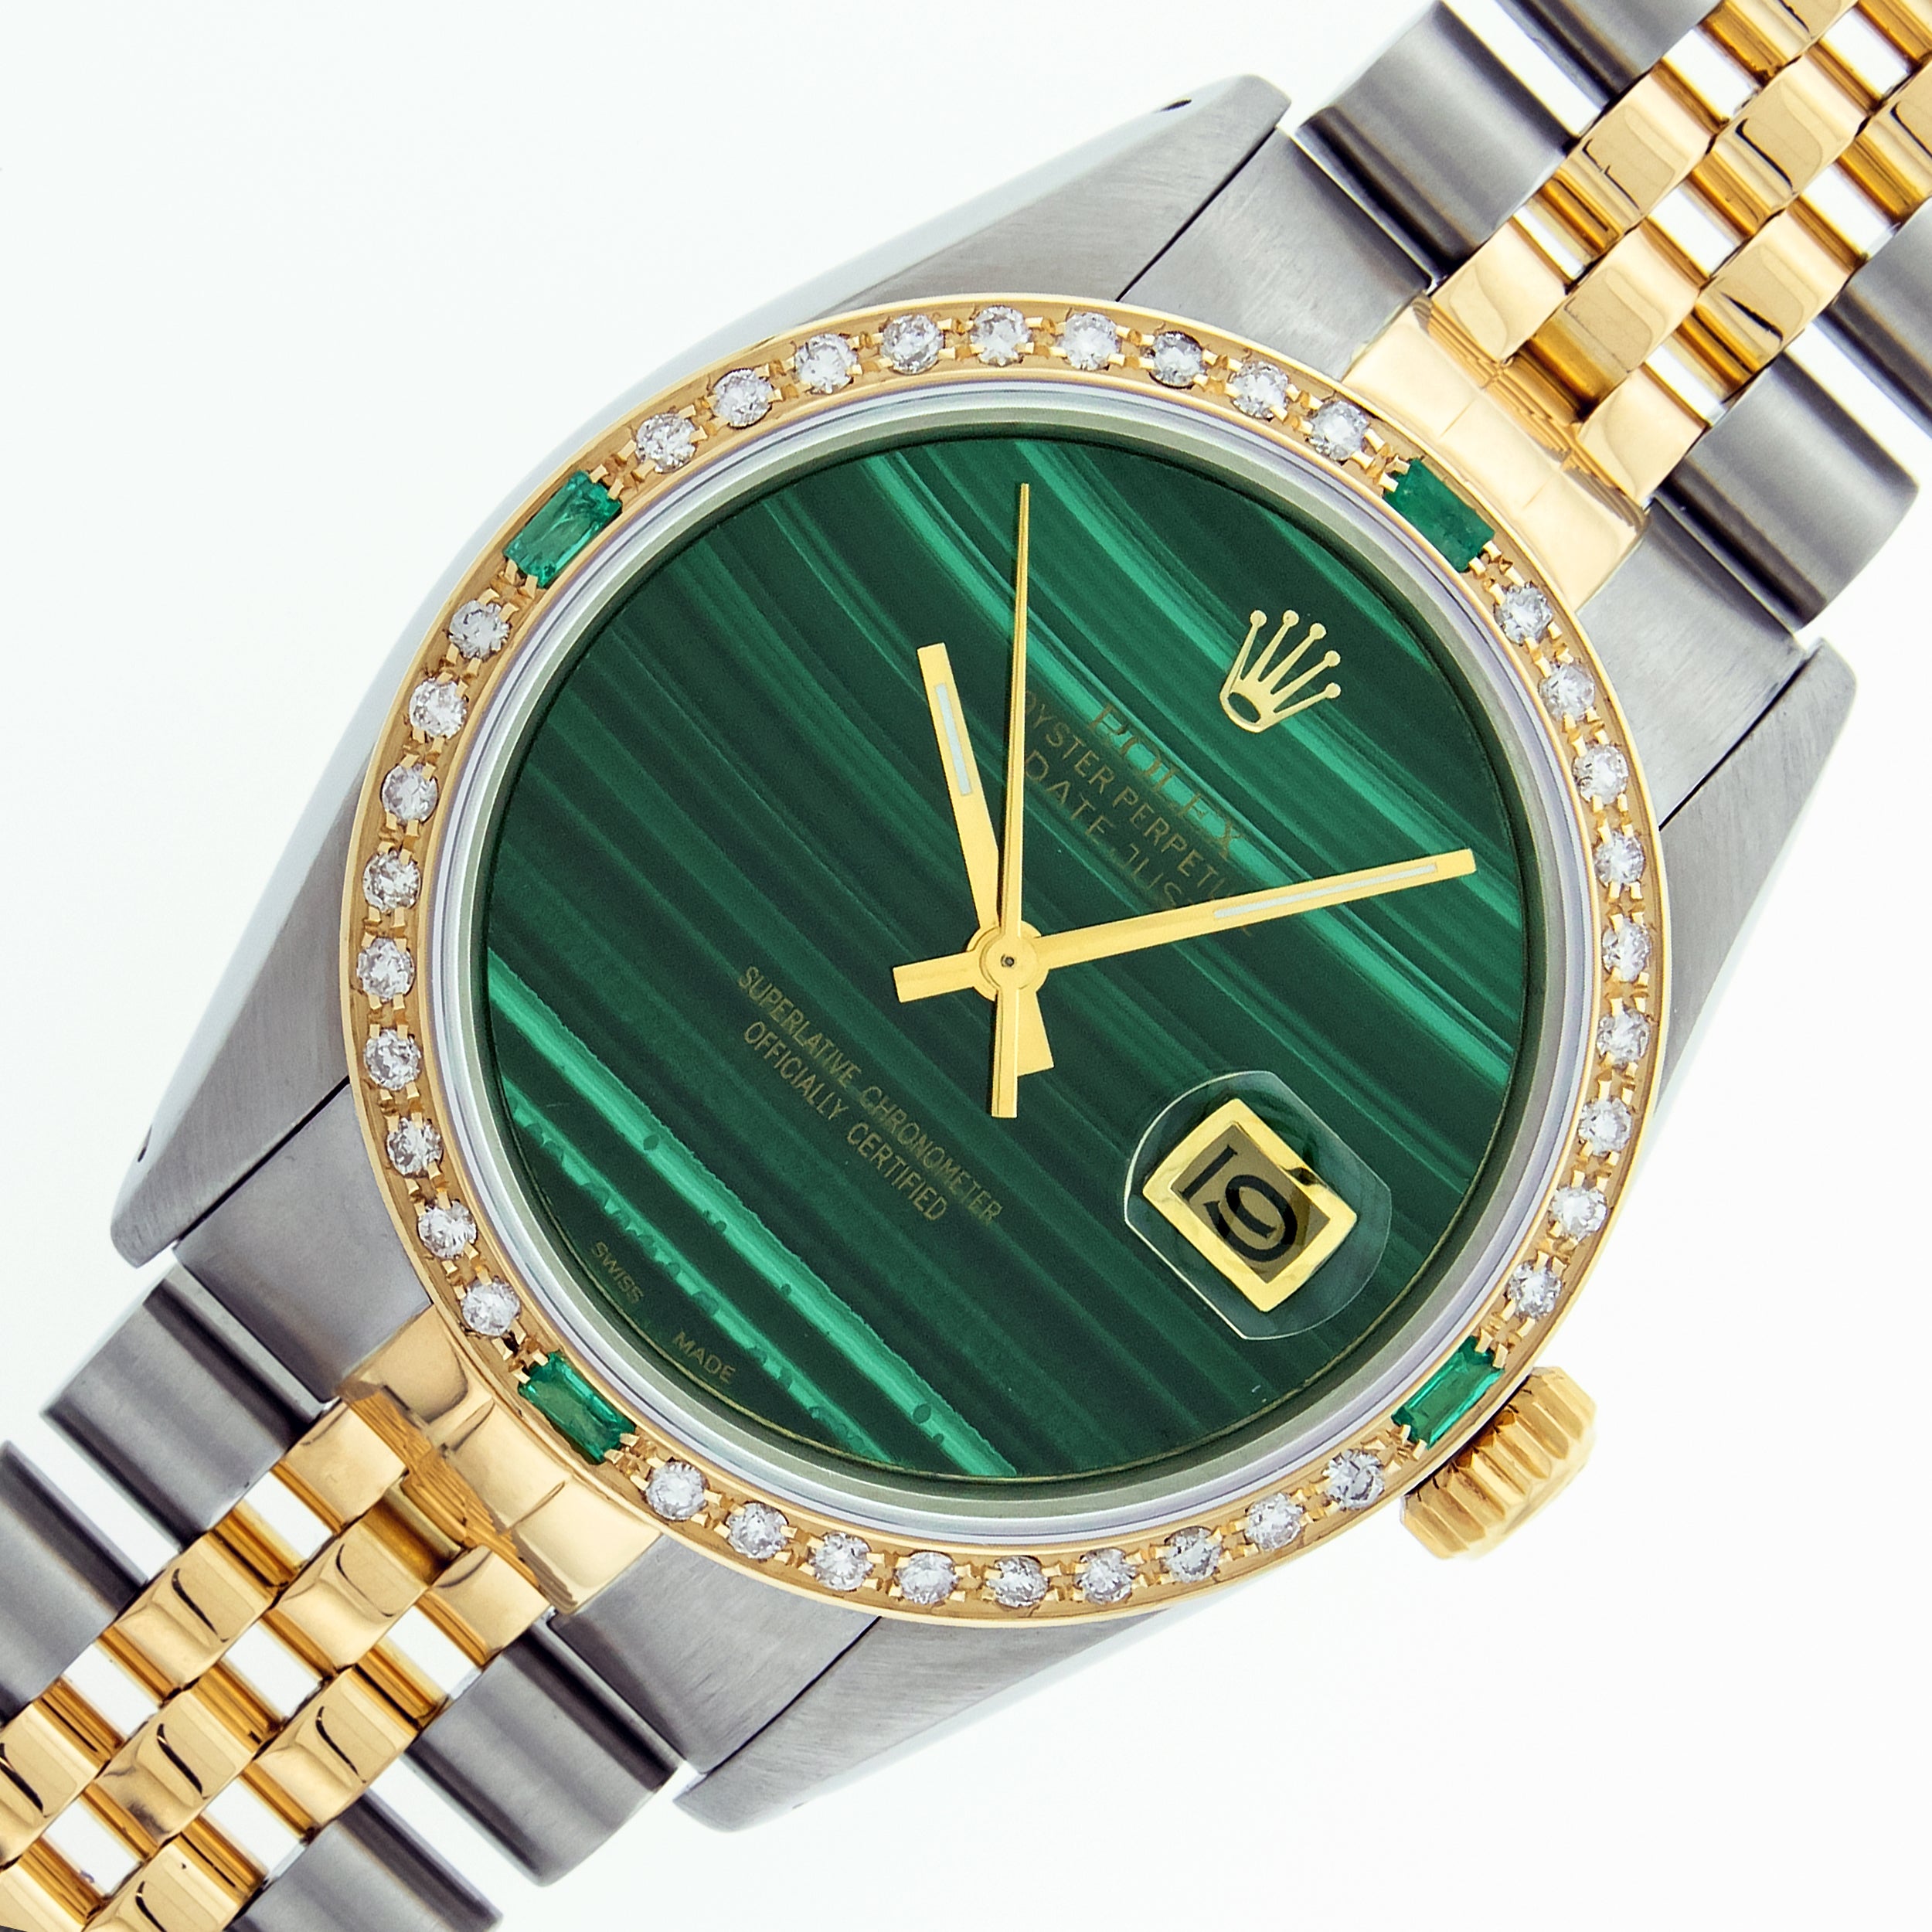 Rolex Datejust 36 18k Gold / Steel Automatic Black Dial Diamond Bezel  Jubilee Bracelet with Rolex Box 16013 - Just Serviced